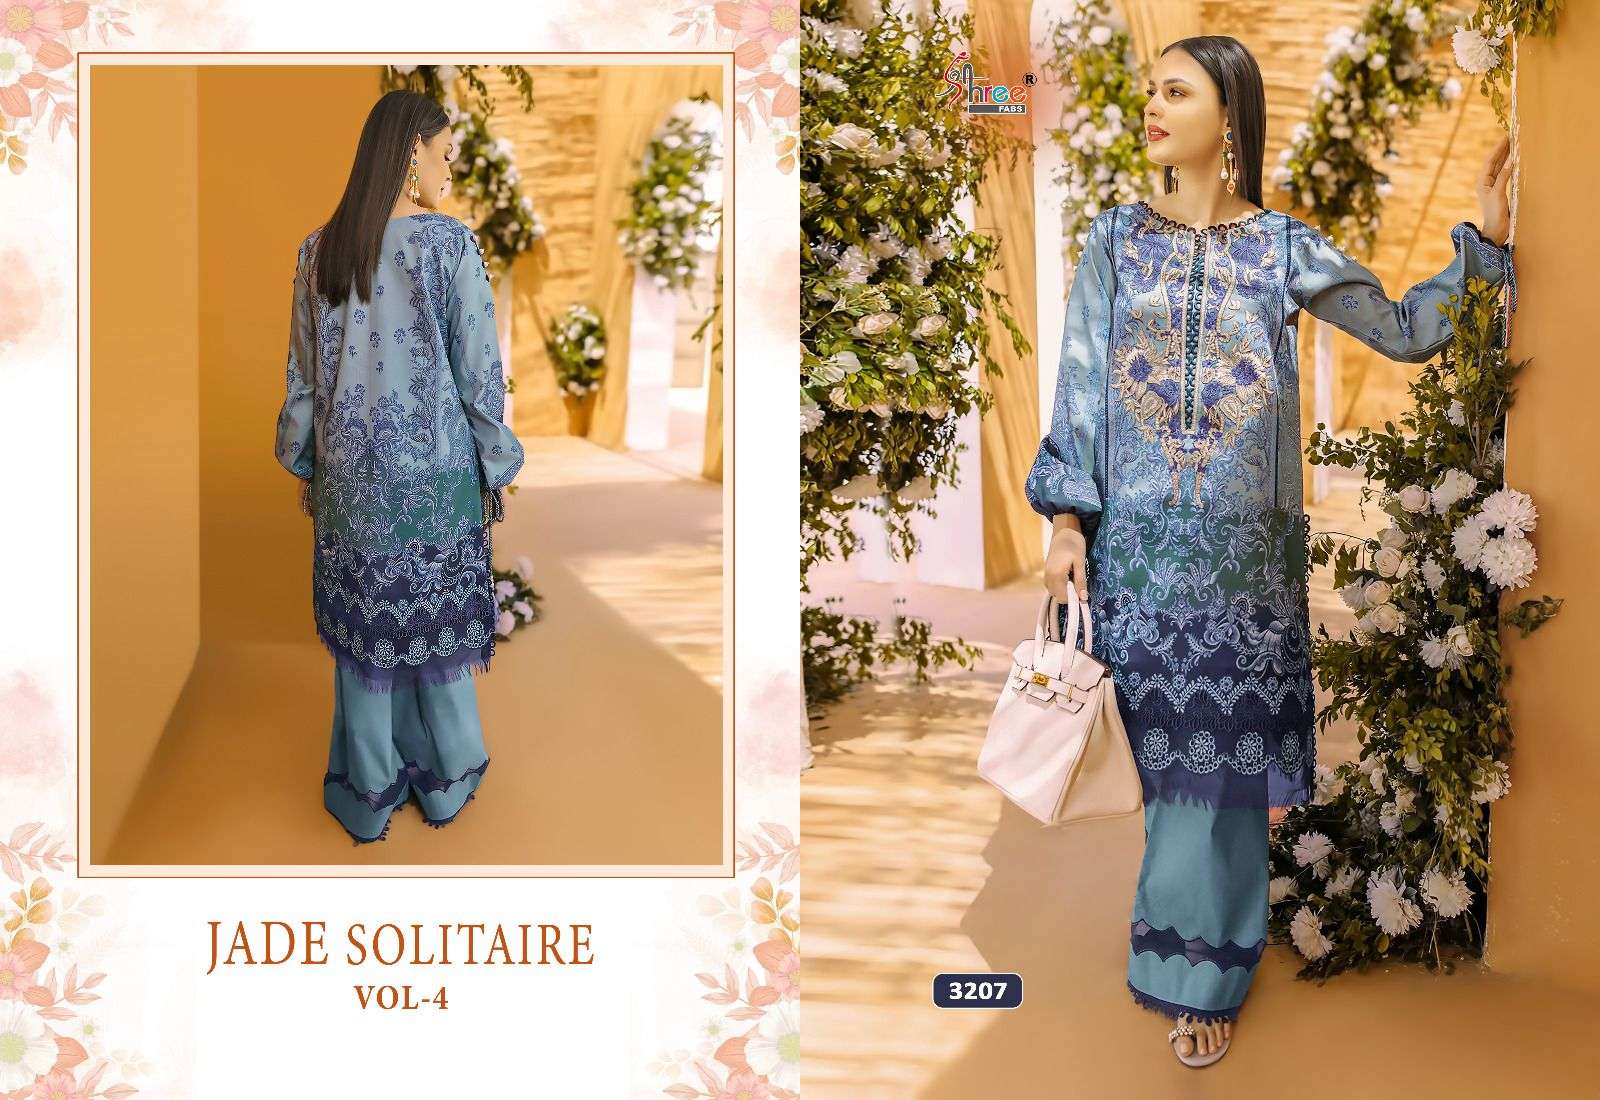 Shree Jade Solitaire Vol 4 Chiffon Dupatta Pakistani Salwar Suits Wholesale catalog